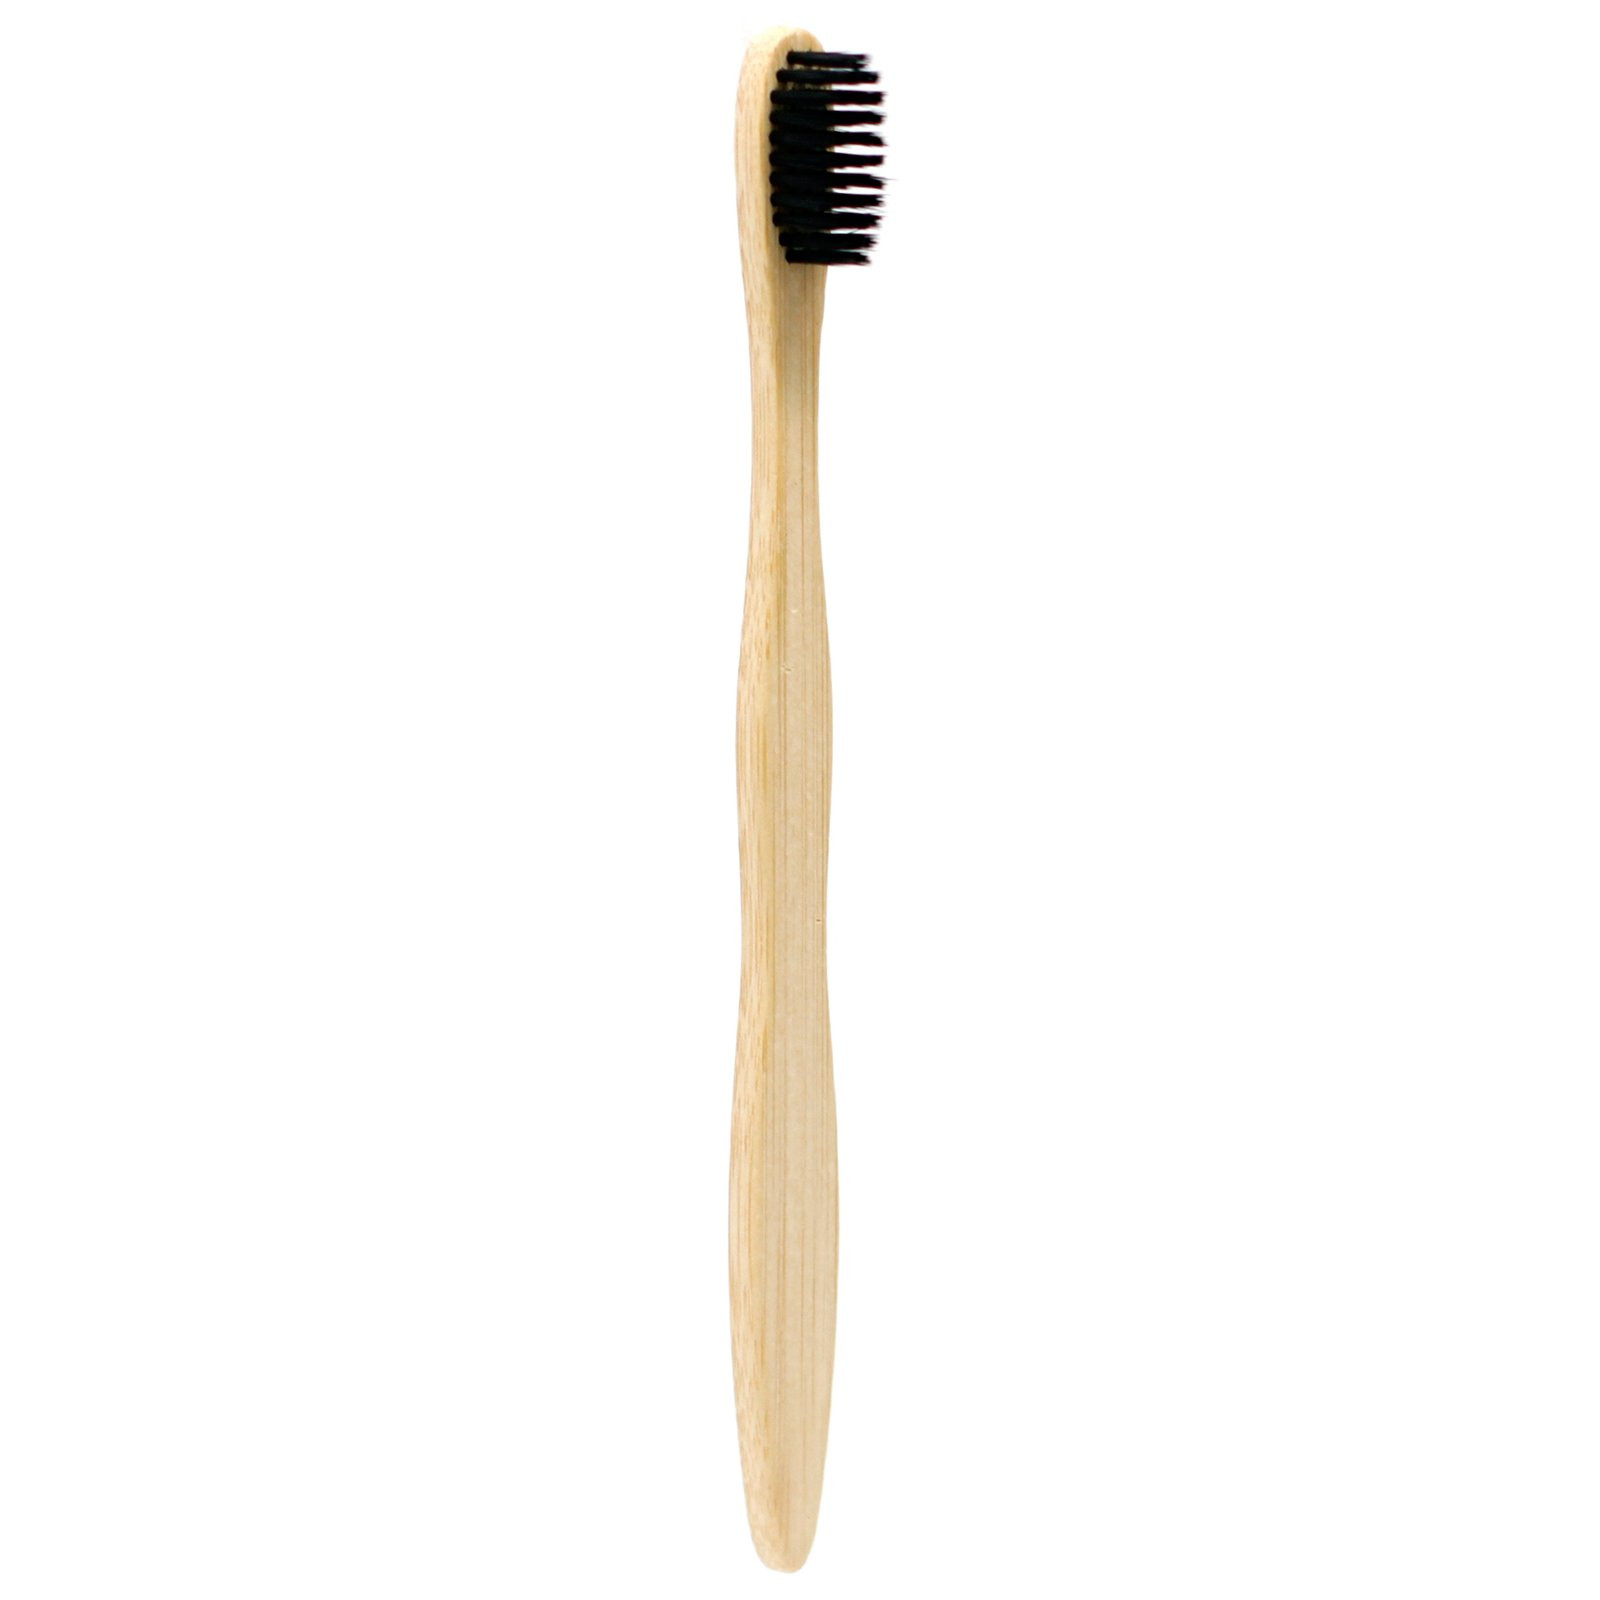 2 x Bamboo Toothbrush - Charcoal Medium Soft